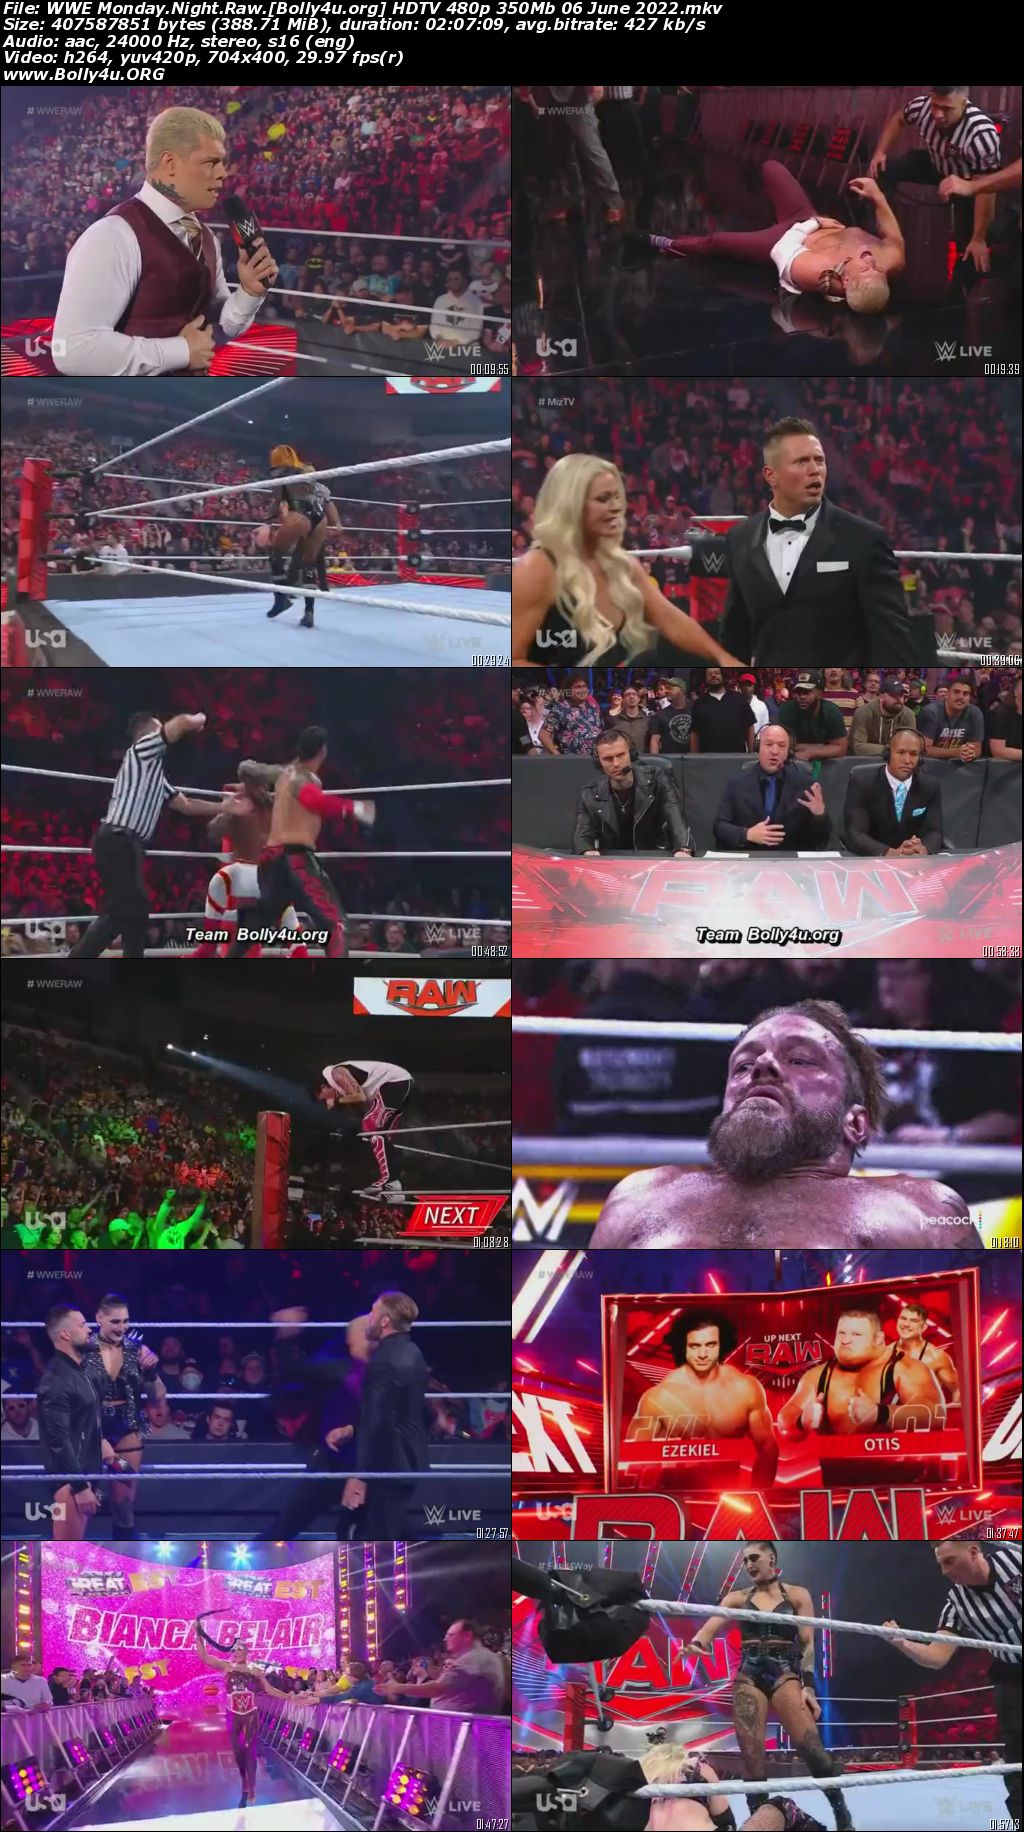 WWE Monday Night Raw HDTV 480p 350Mb 06 June 2022 Download